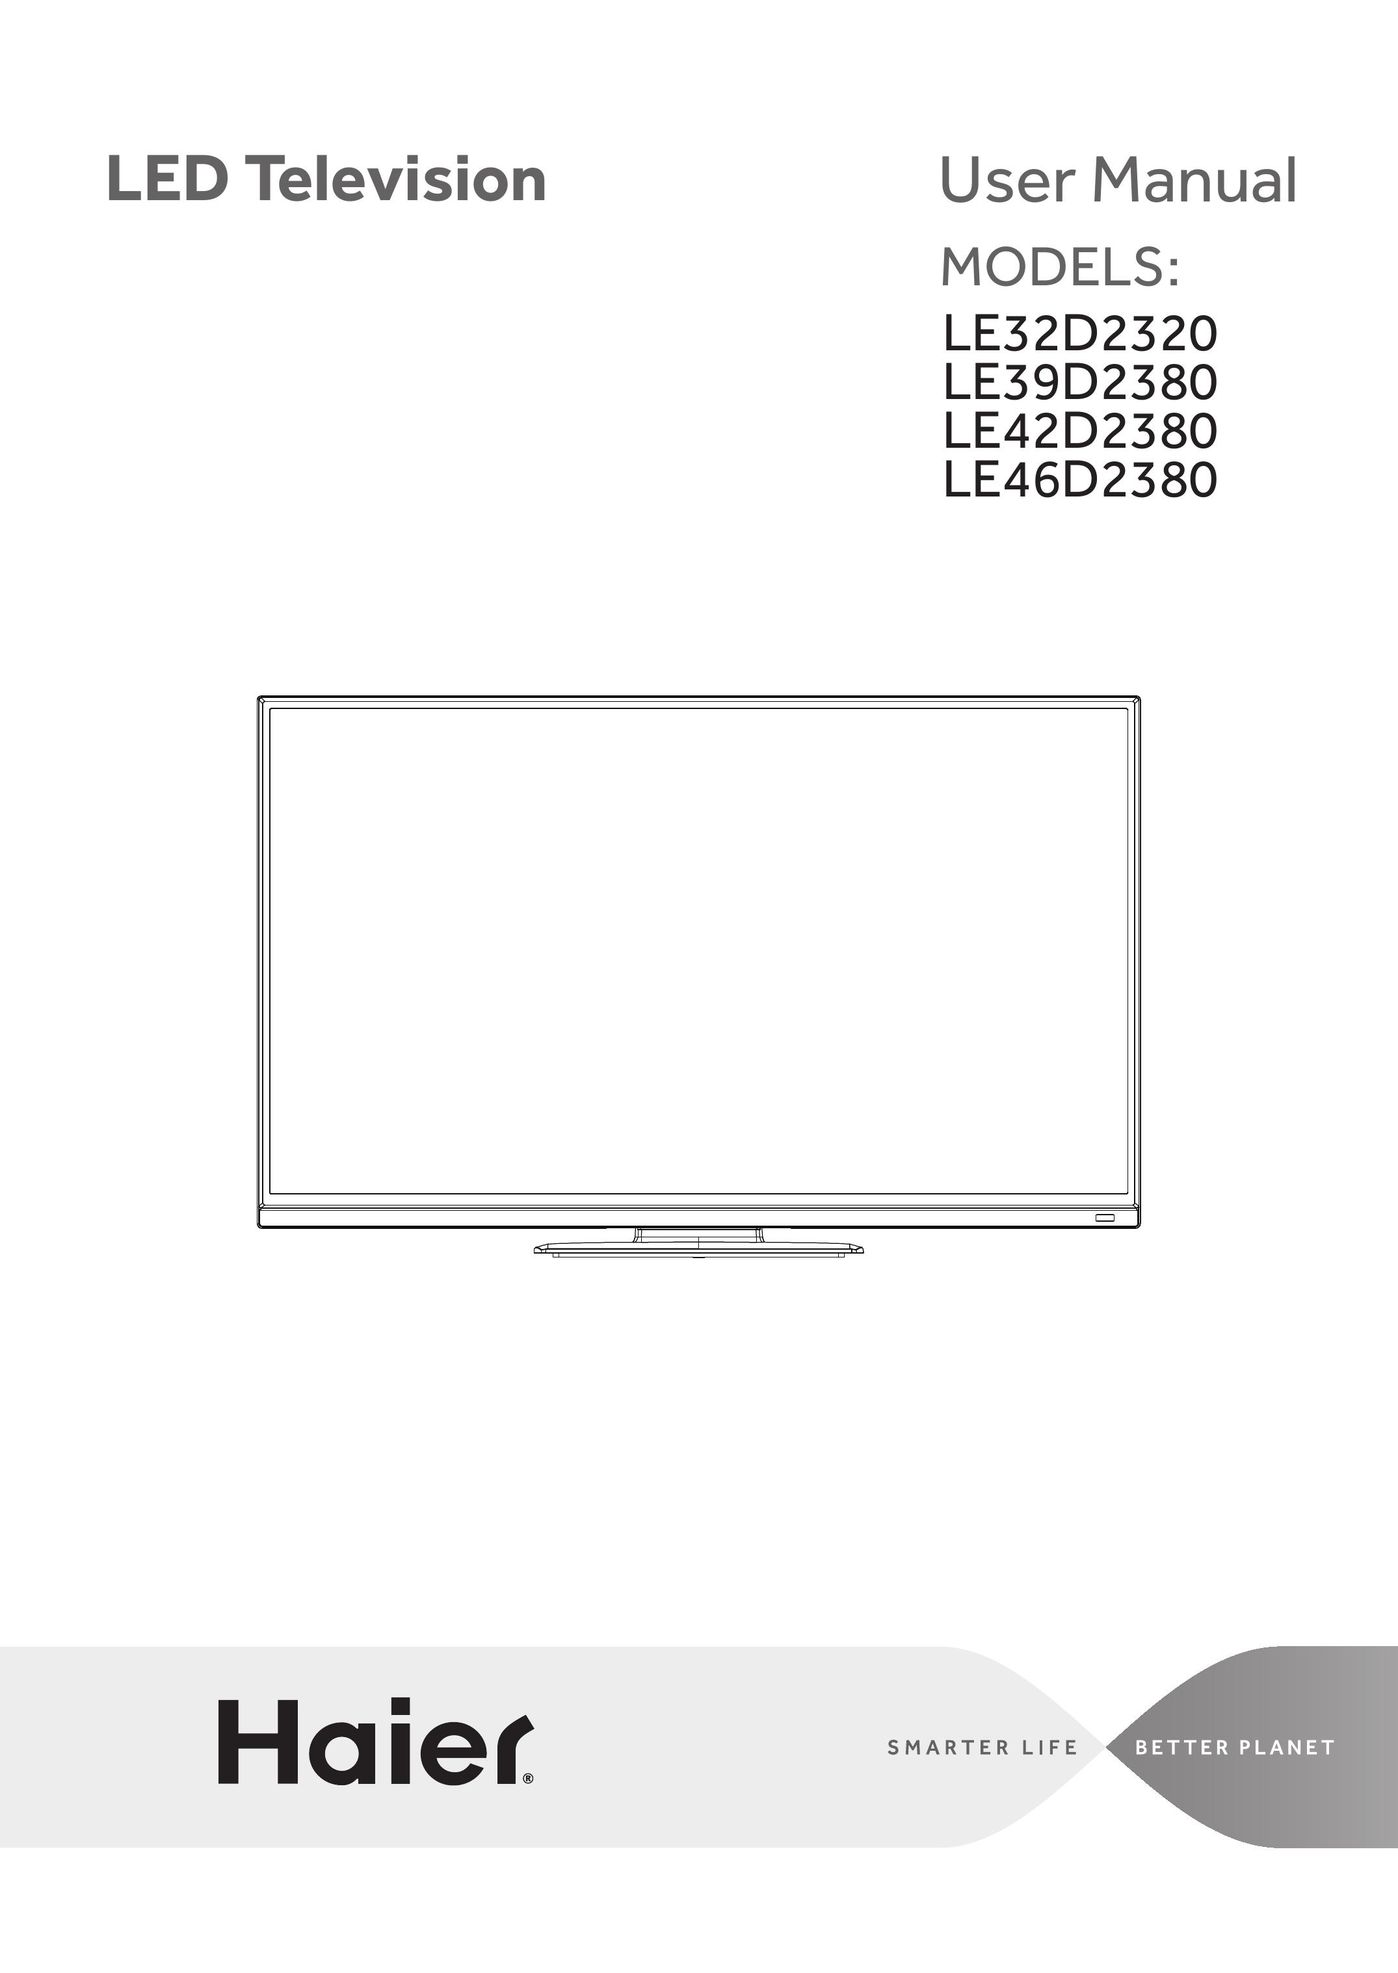 Haier LE42D2380 Car Satellite TV System User Manual